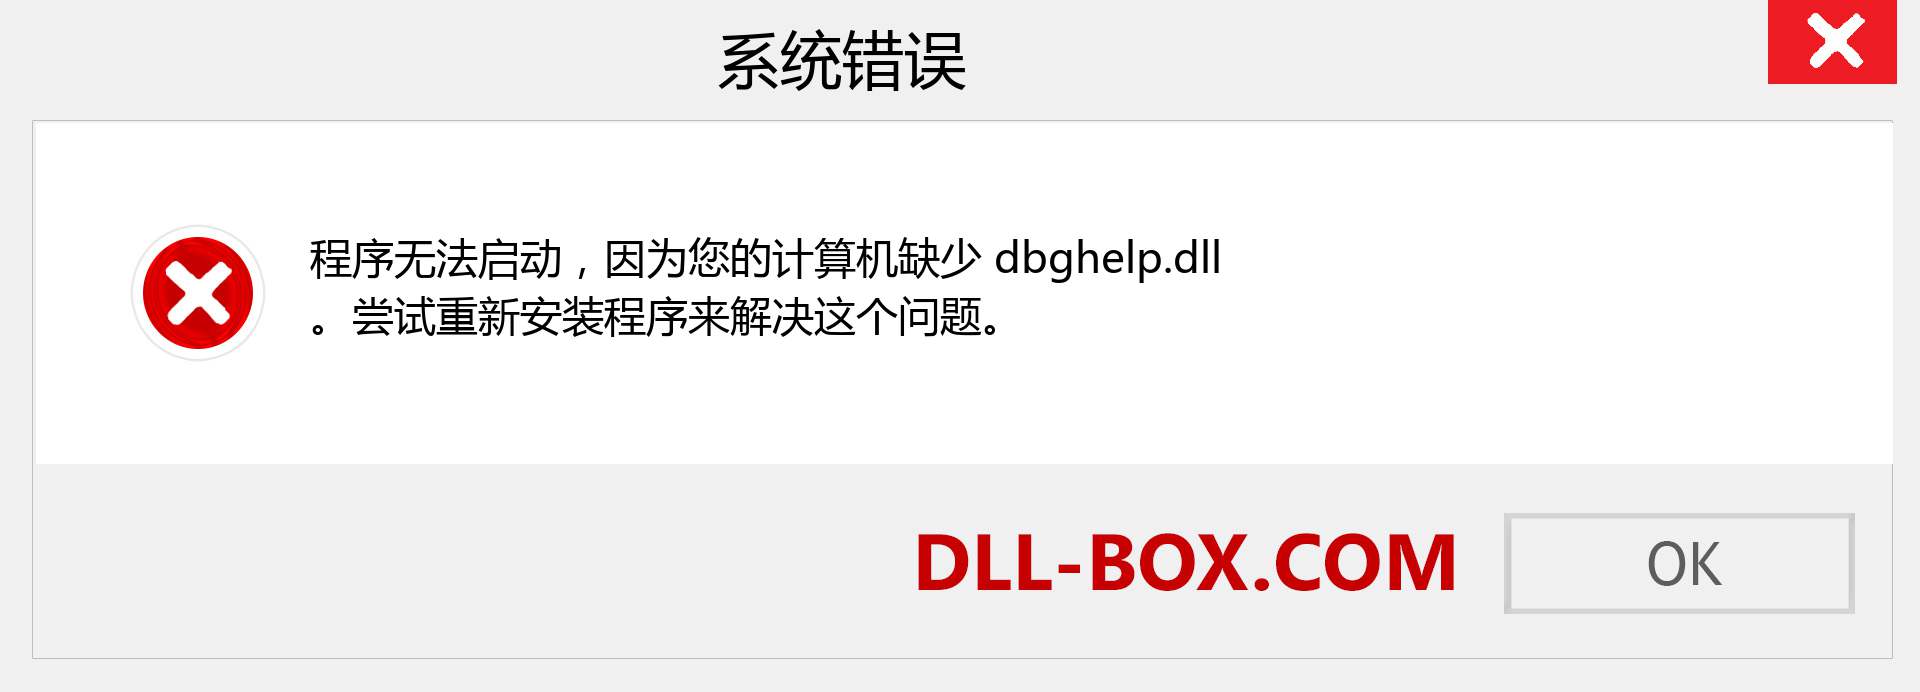 dbghelp.dll 文件丢失？。 适用于 Windows 7、8、10 的下载 - 修复 Windows、照片、图像上的 dbghelp dll 丢失错误